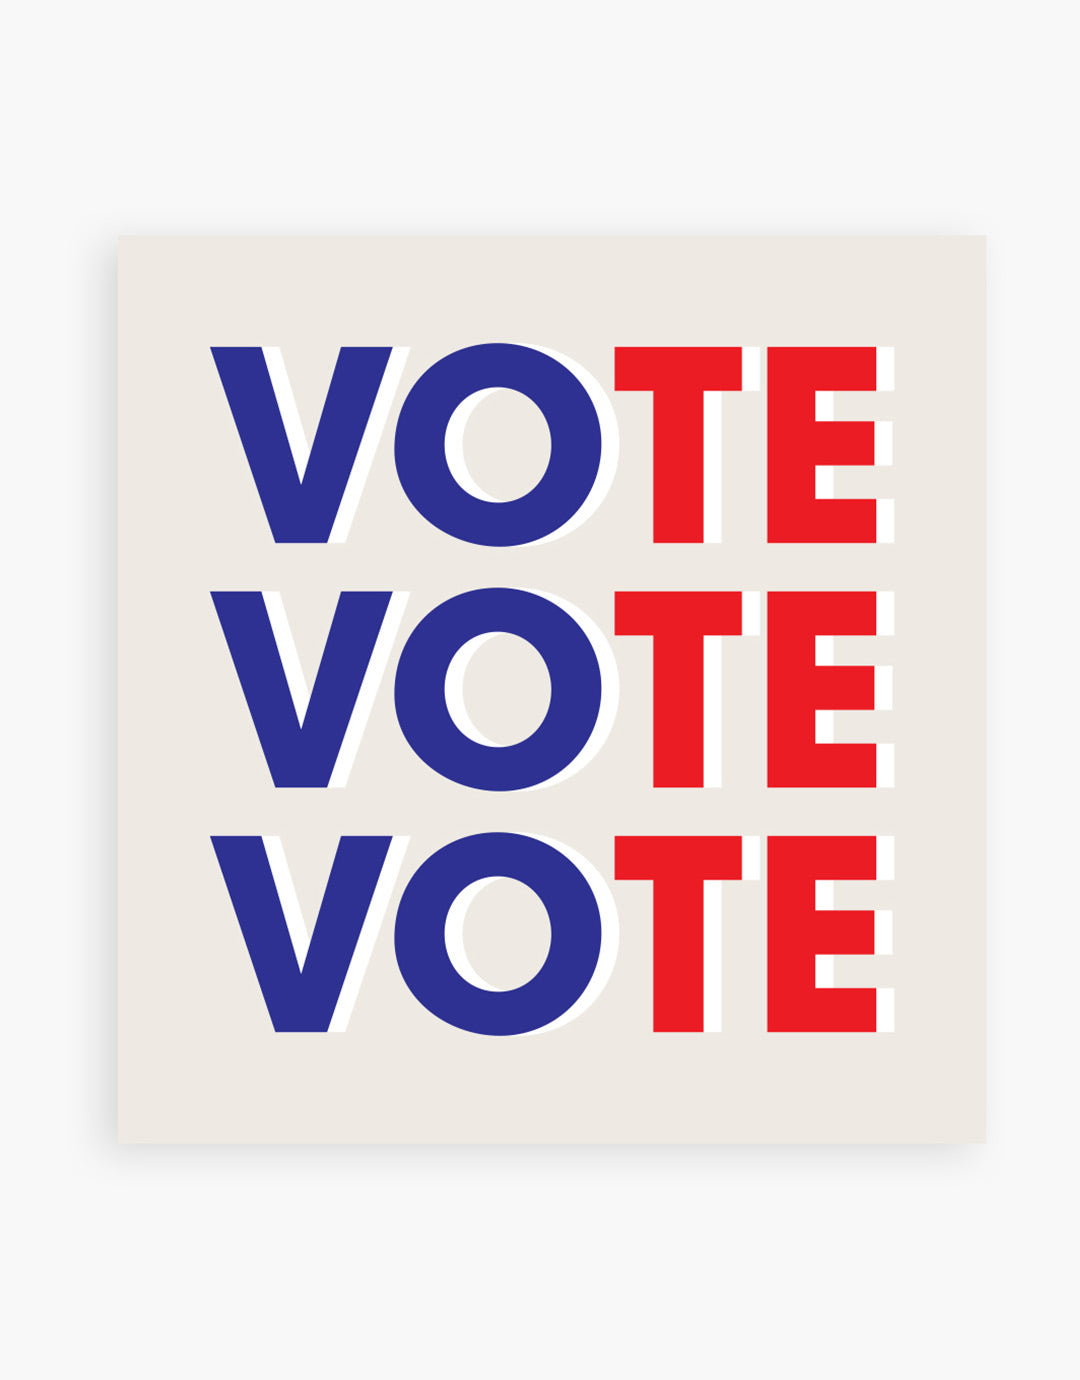 The Vote Vote Vote Sticker